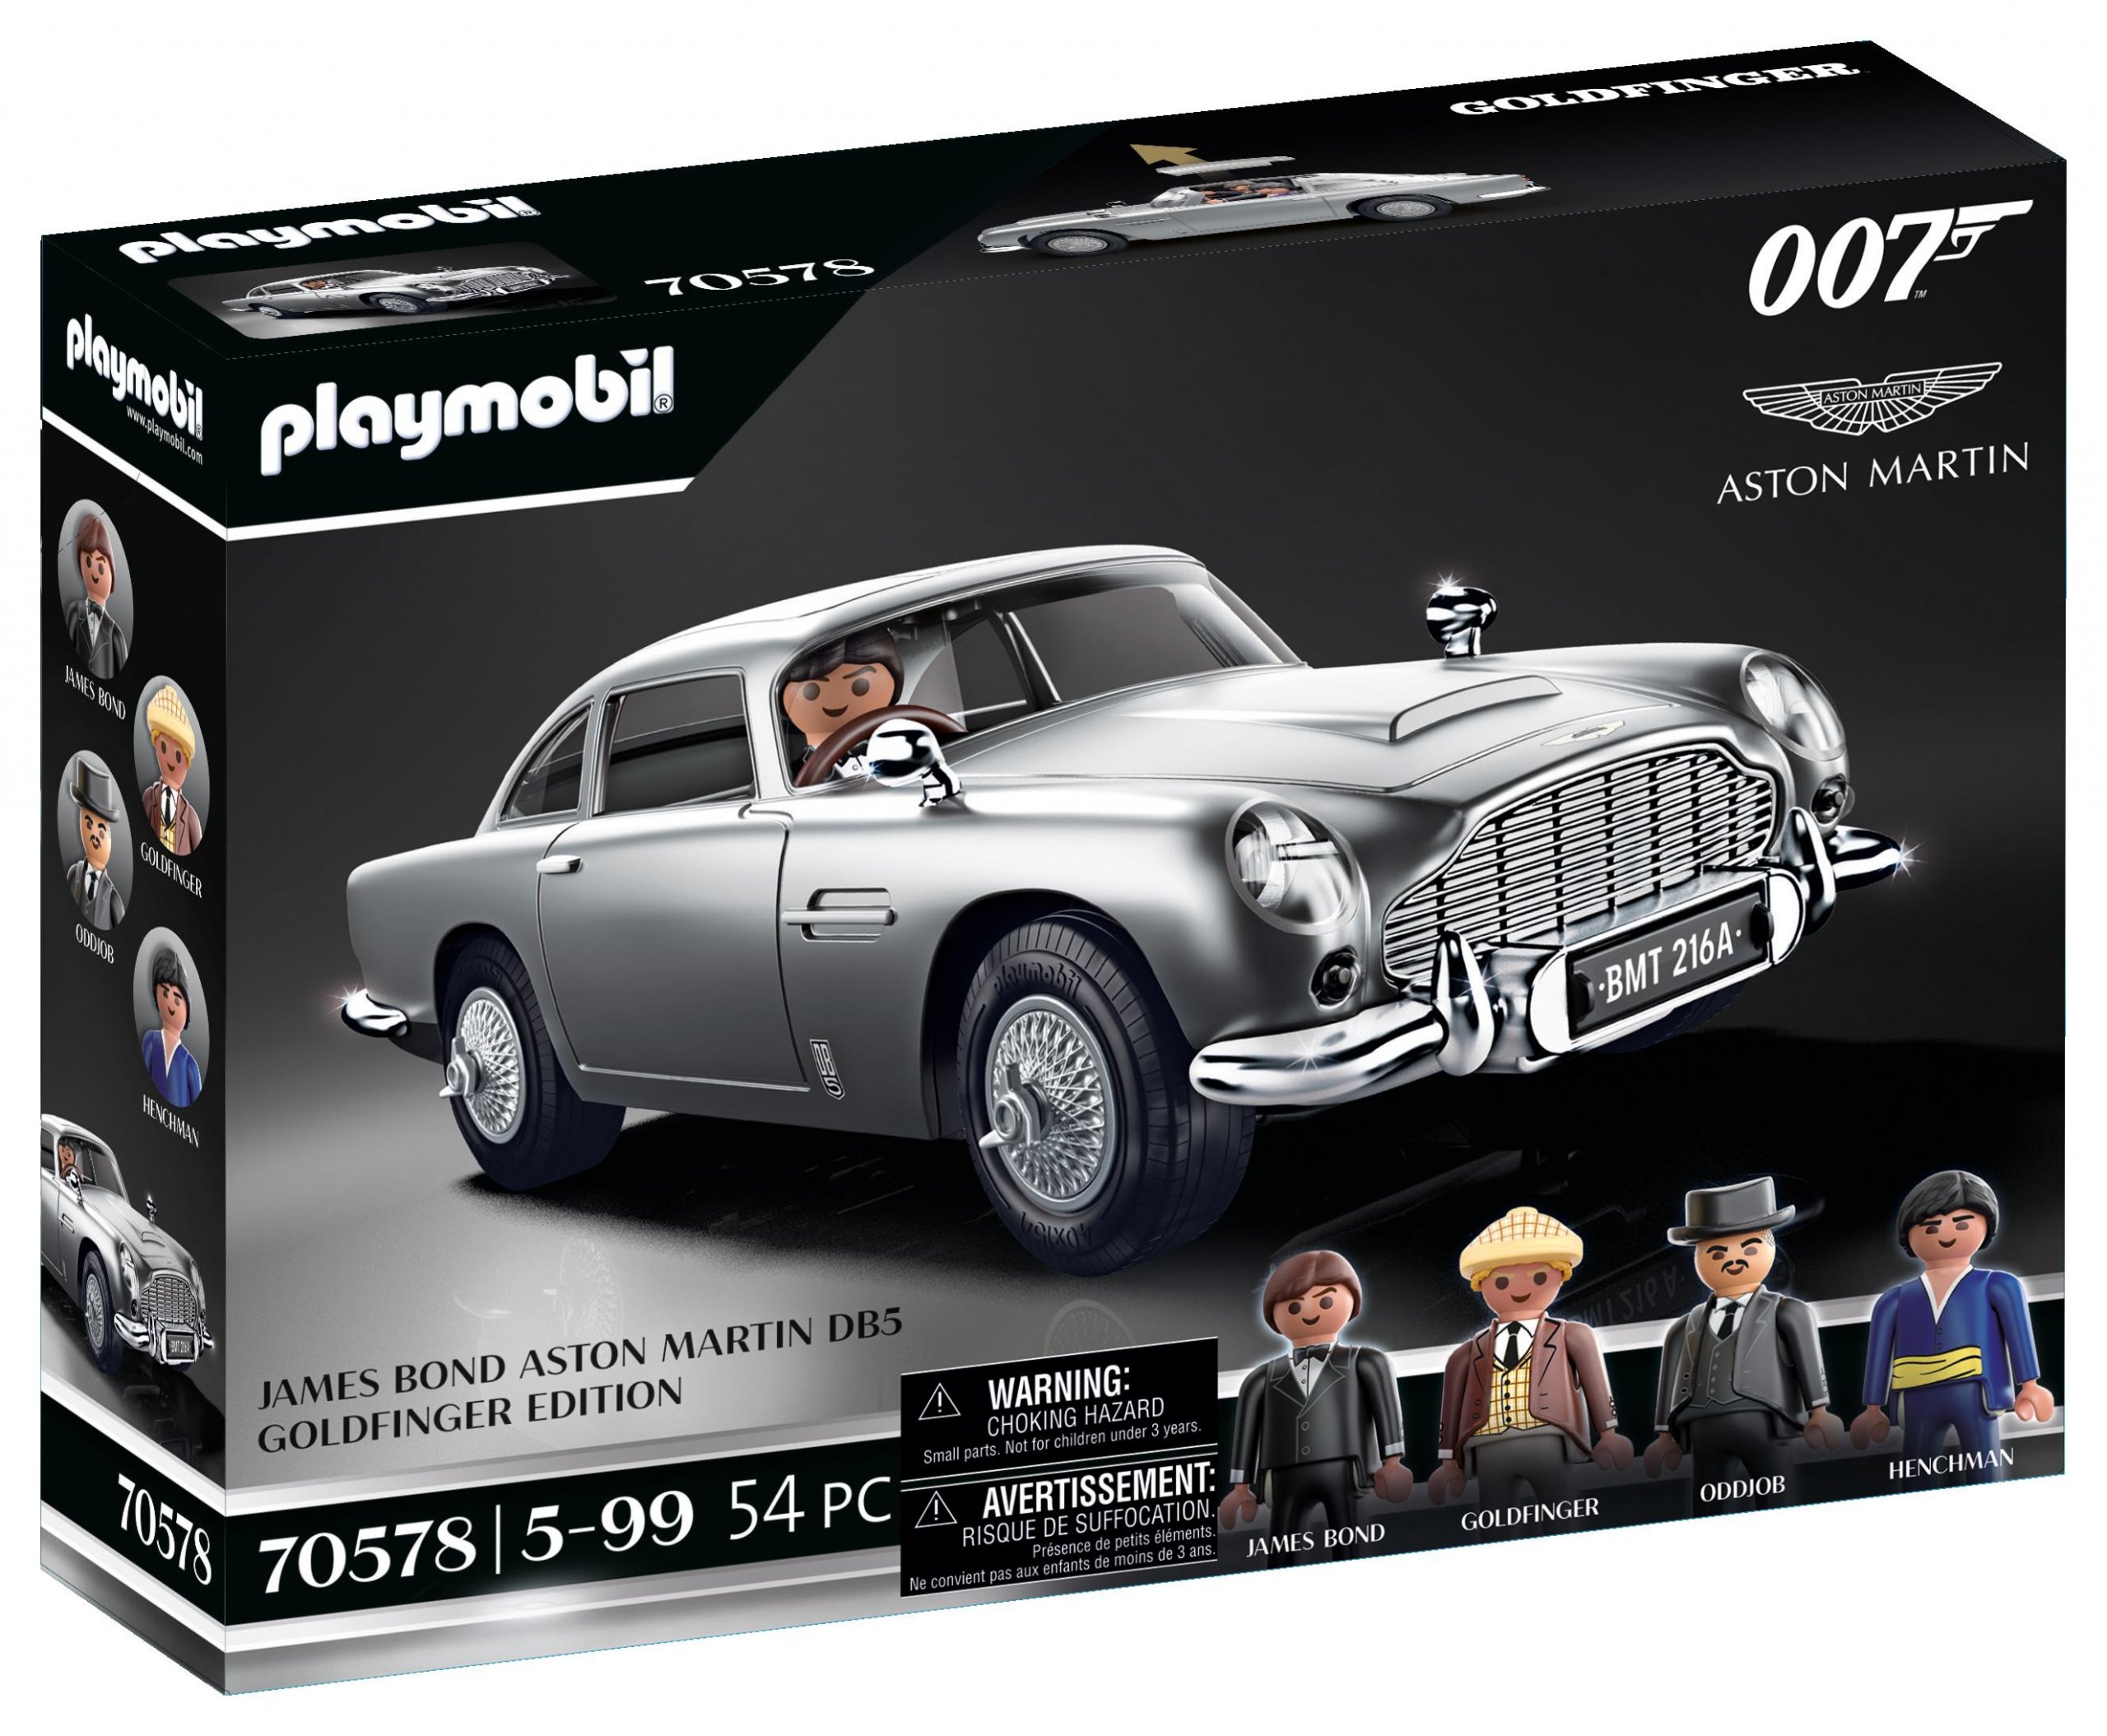 Playmobil Aston Martin Db5 007 James Bond